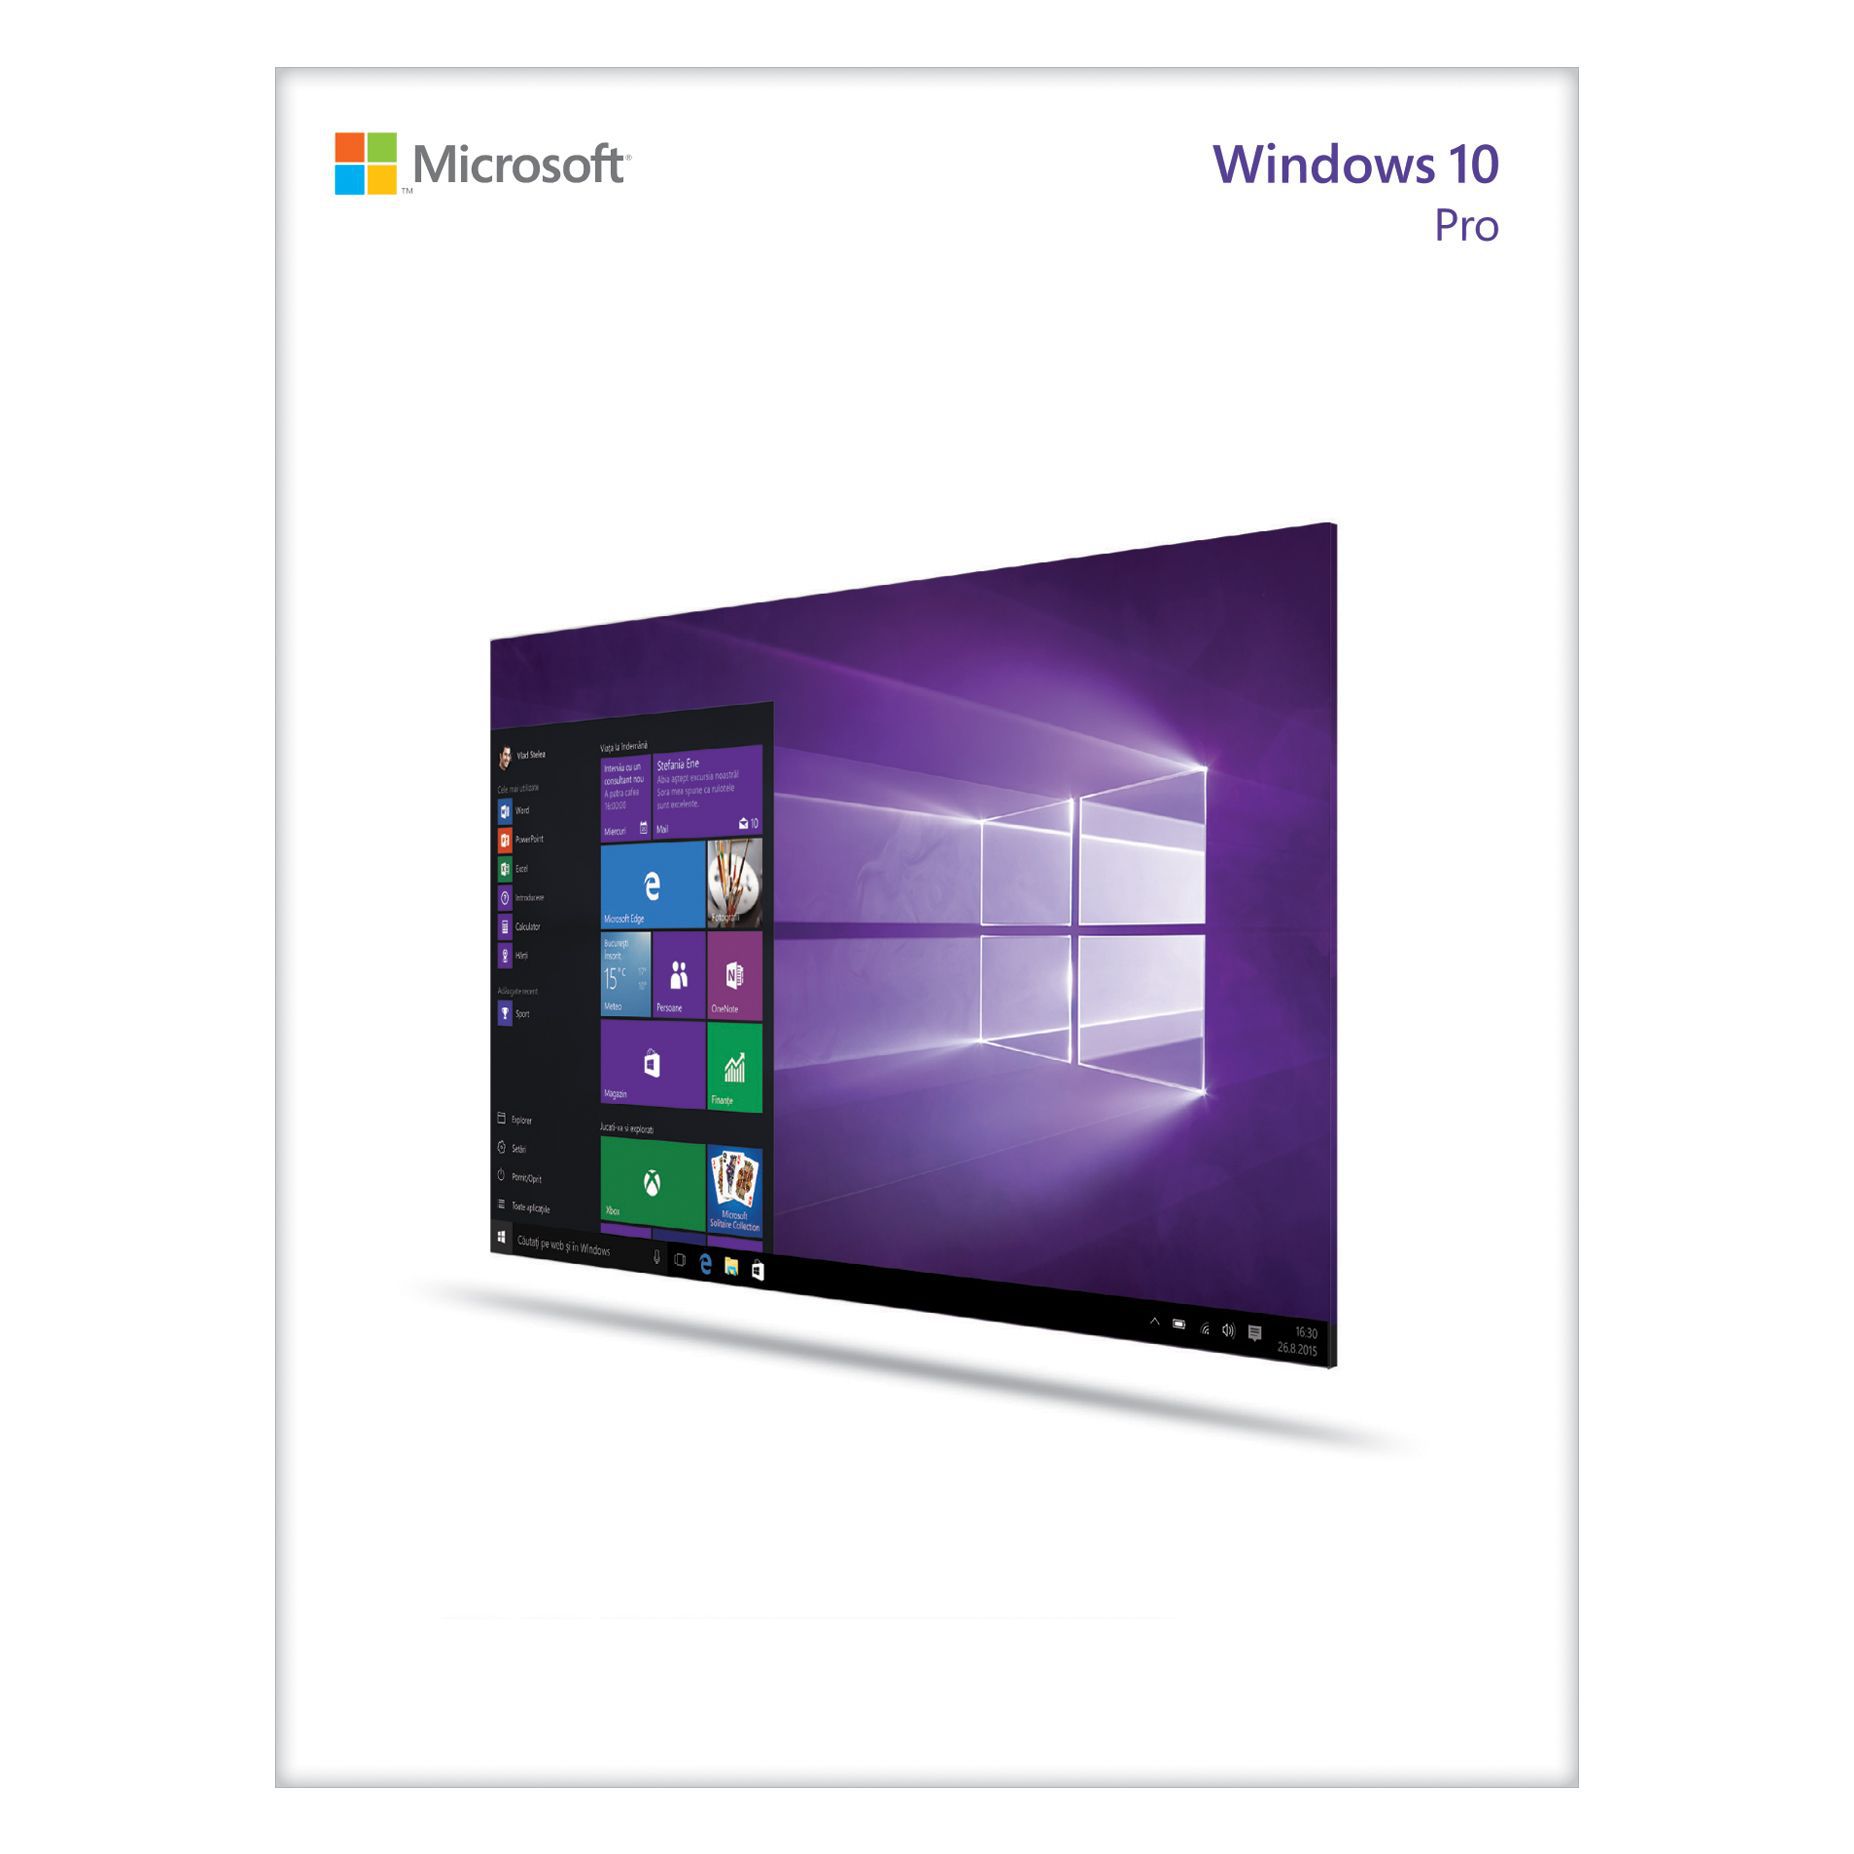 MS SB Windows 10 Pro 32bit [UK] DVD_2